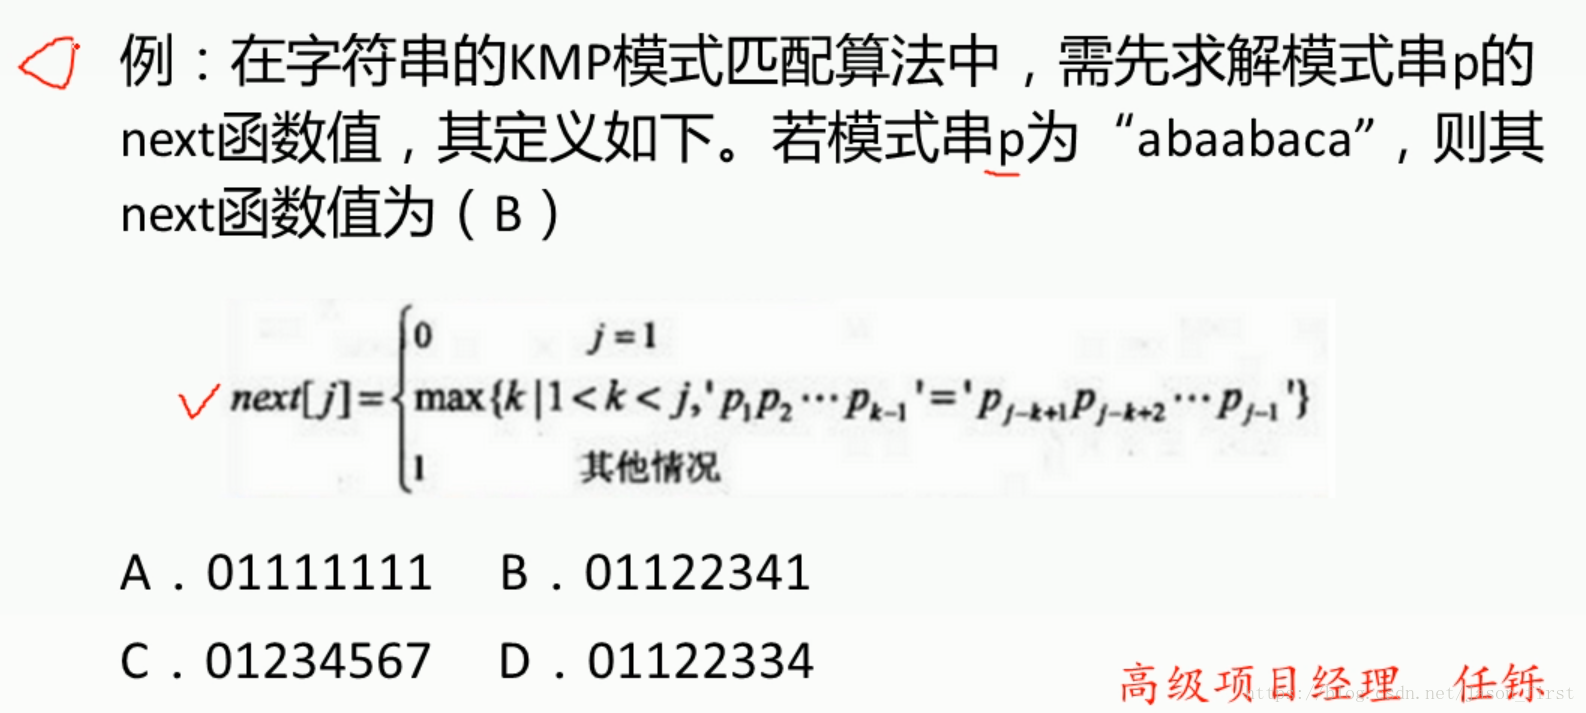 KMP Algorithm Example 1